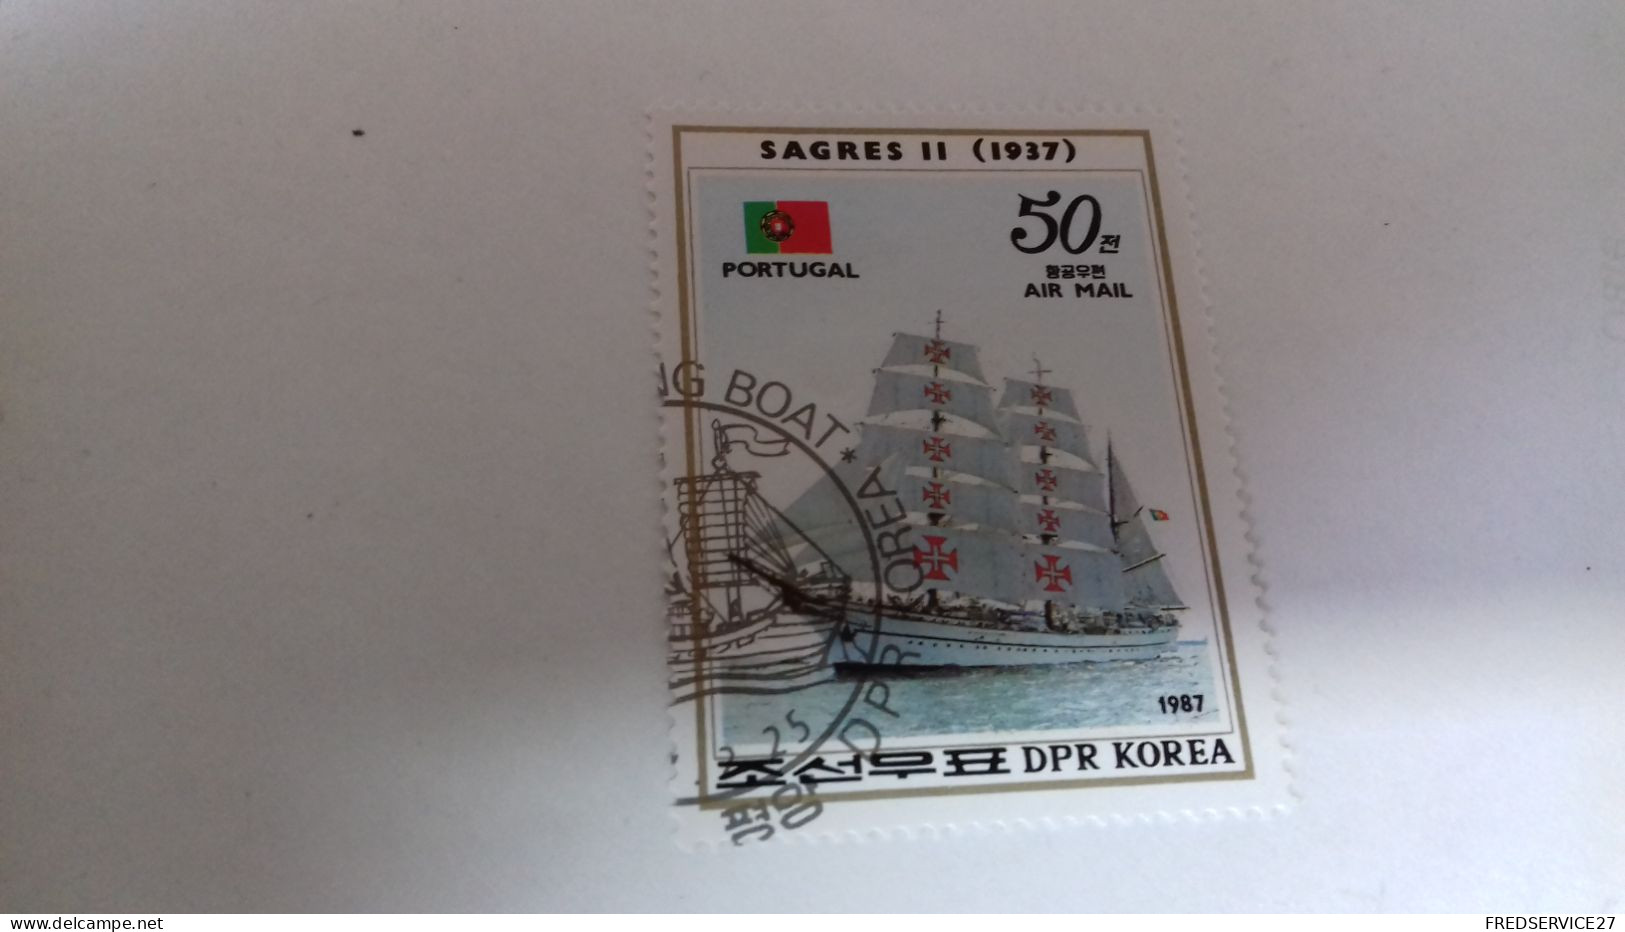 LR / DPR KOREA SAGRES II 1937 BATEAU - Korea, North